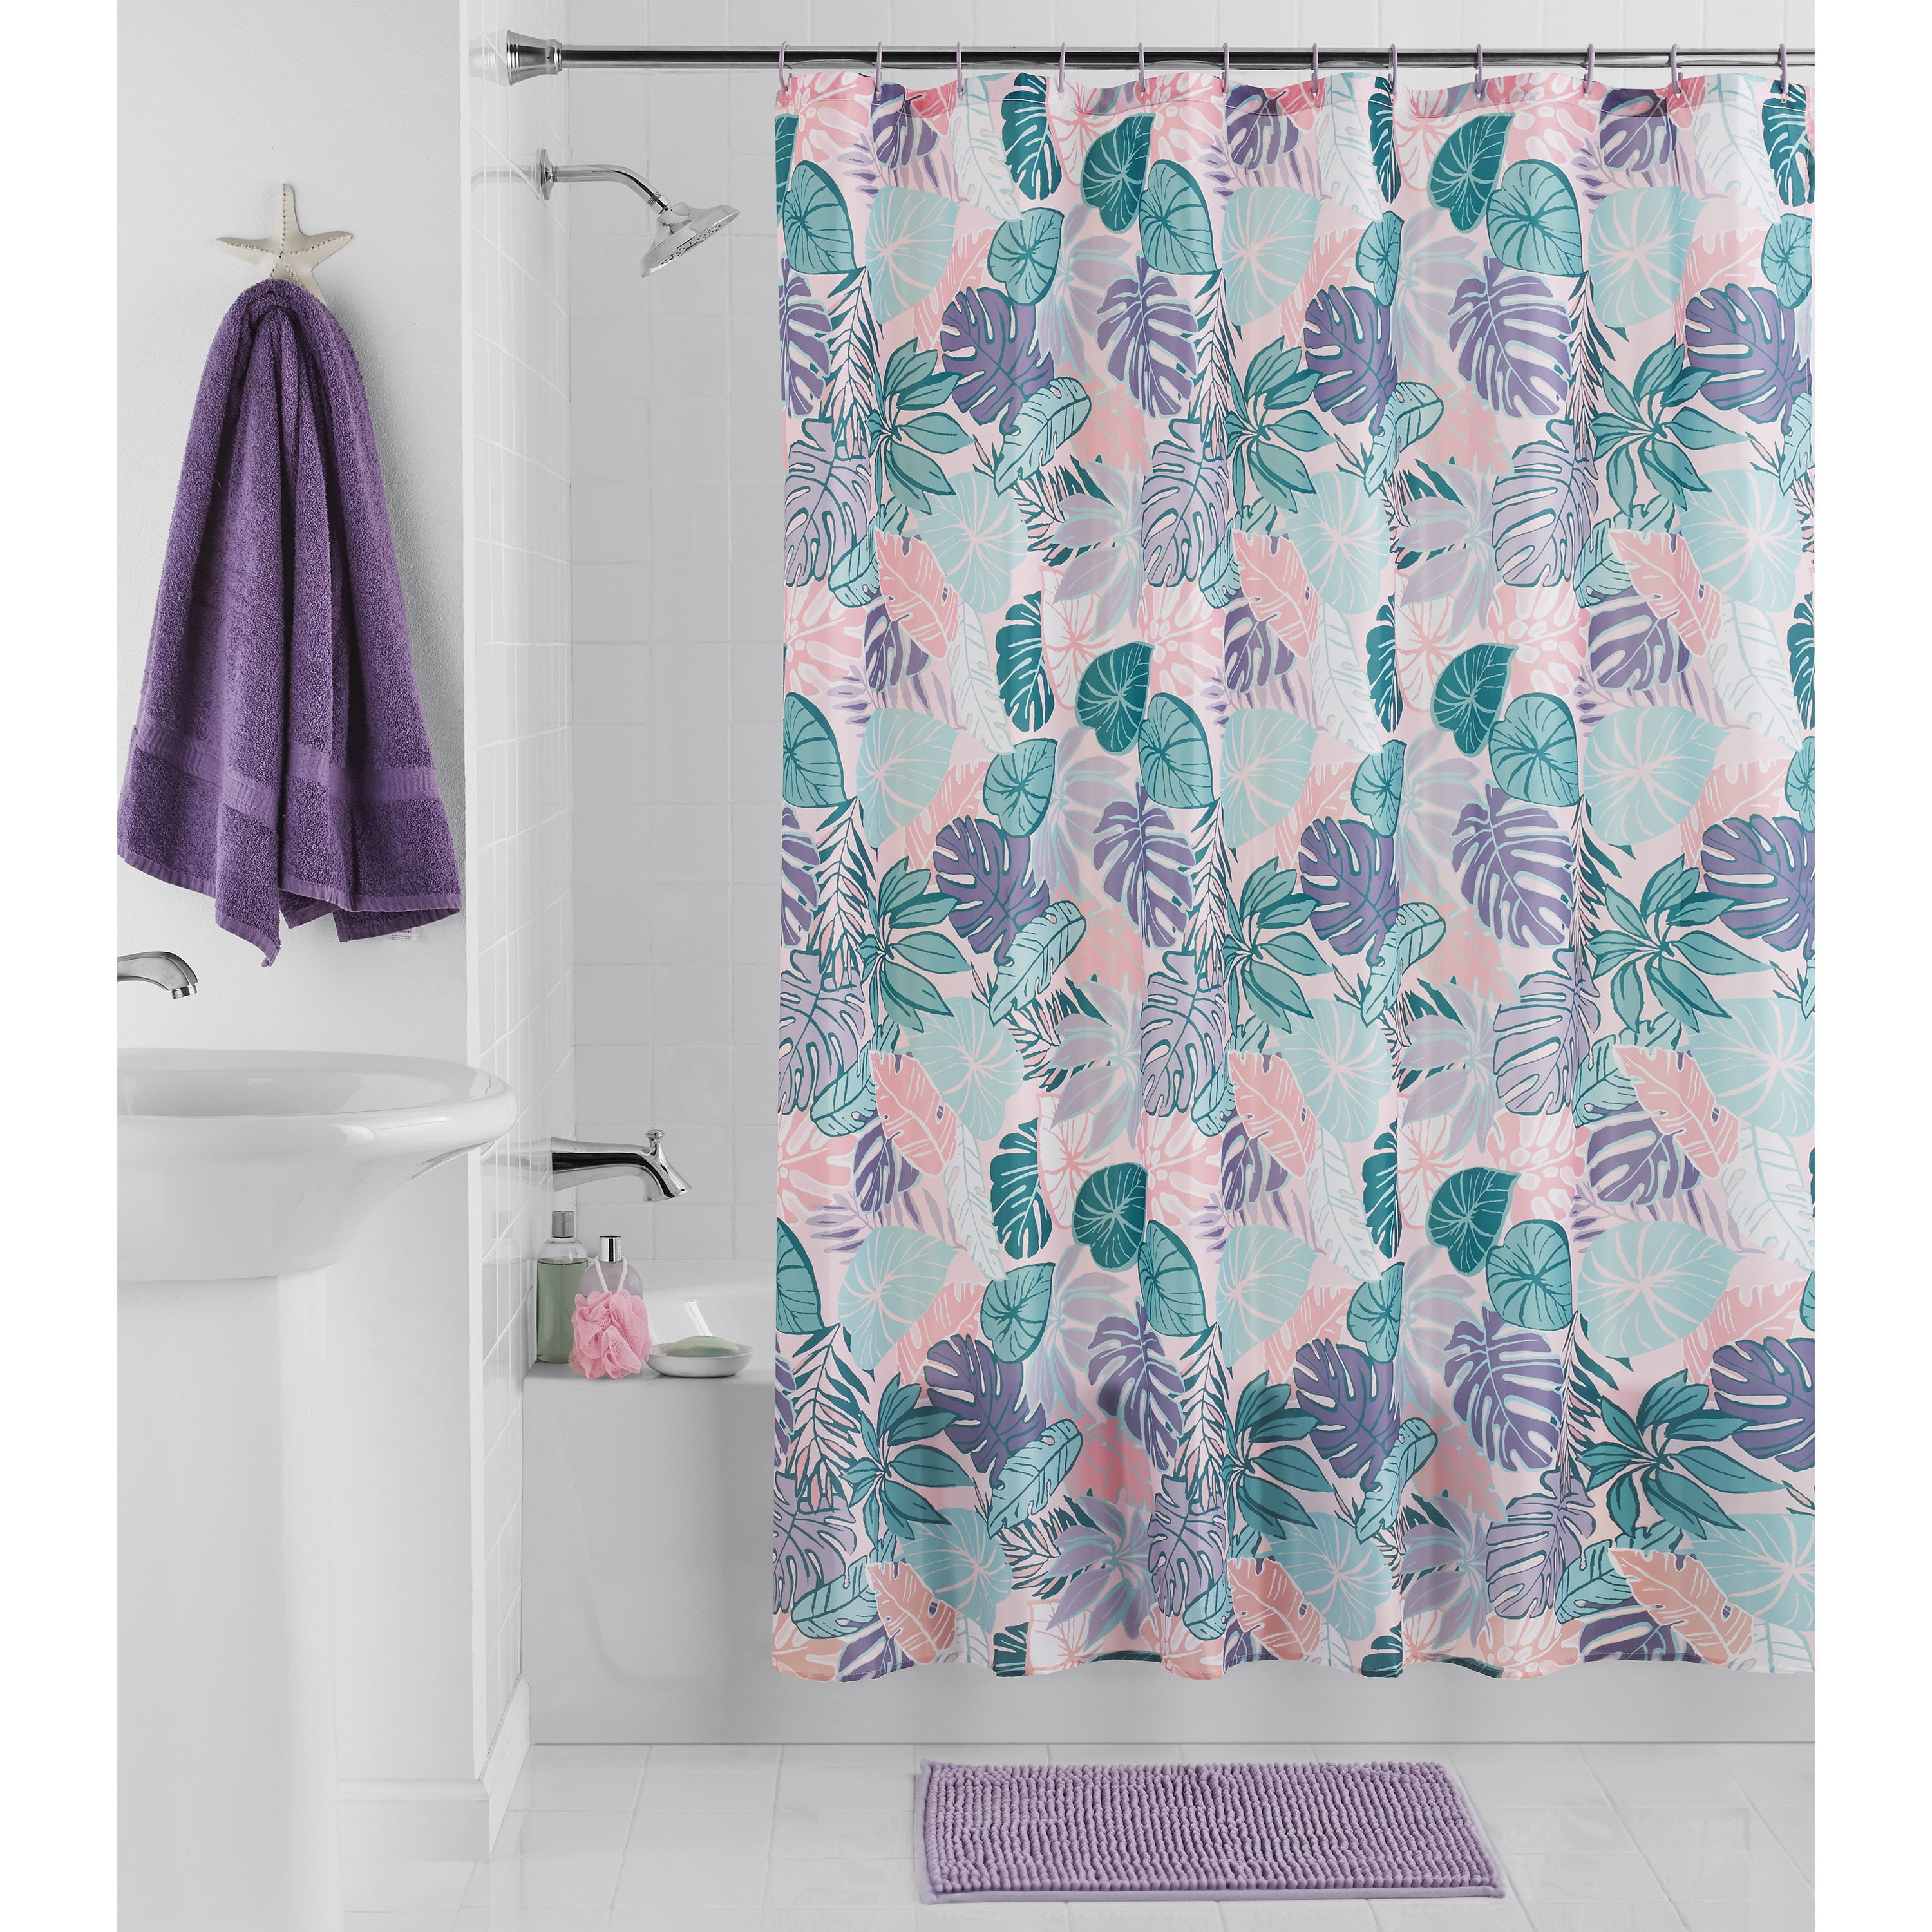 72" Unicorn Bathroom Waterproof Fabric Shower Curtain Doormat Hooks Home Decor 